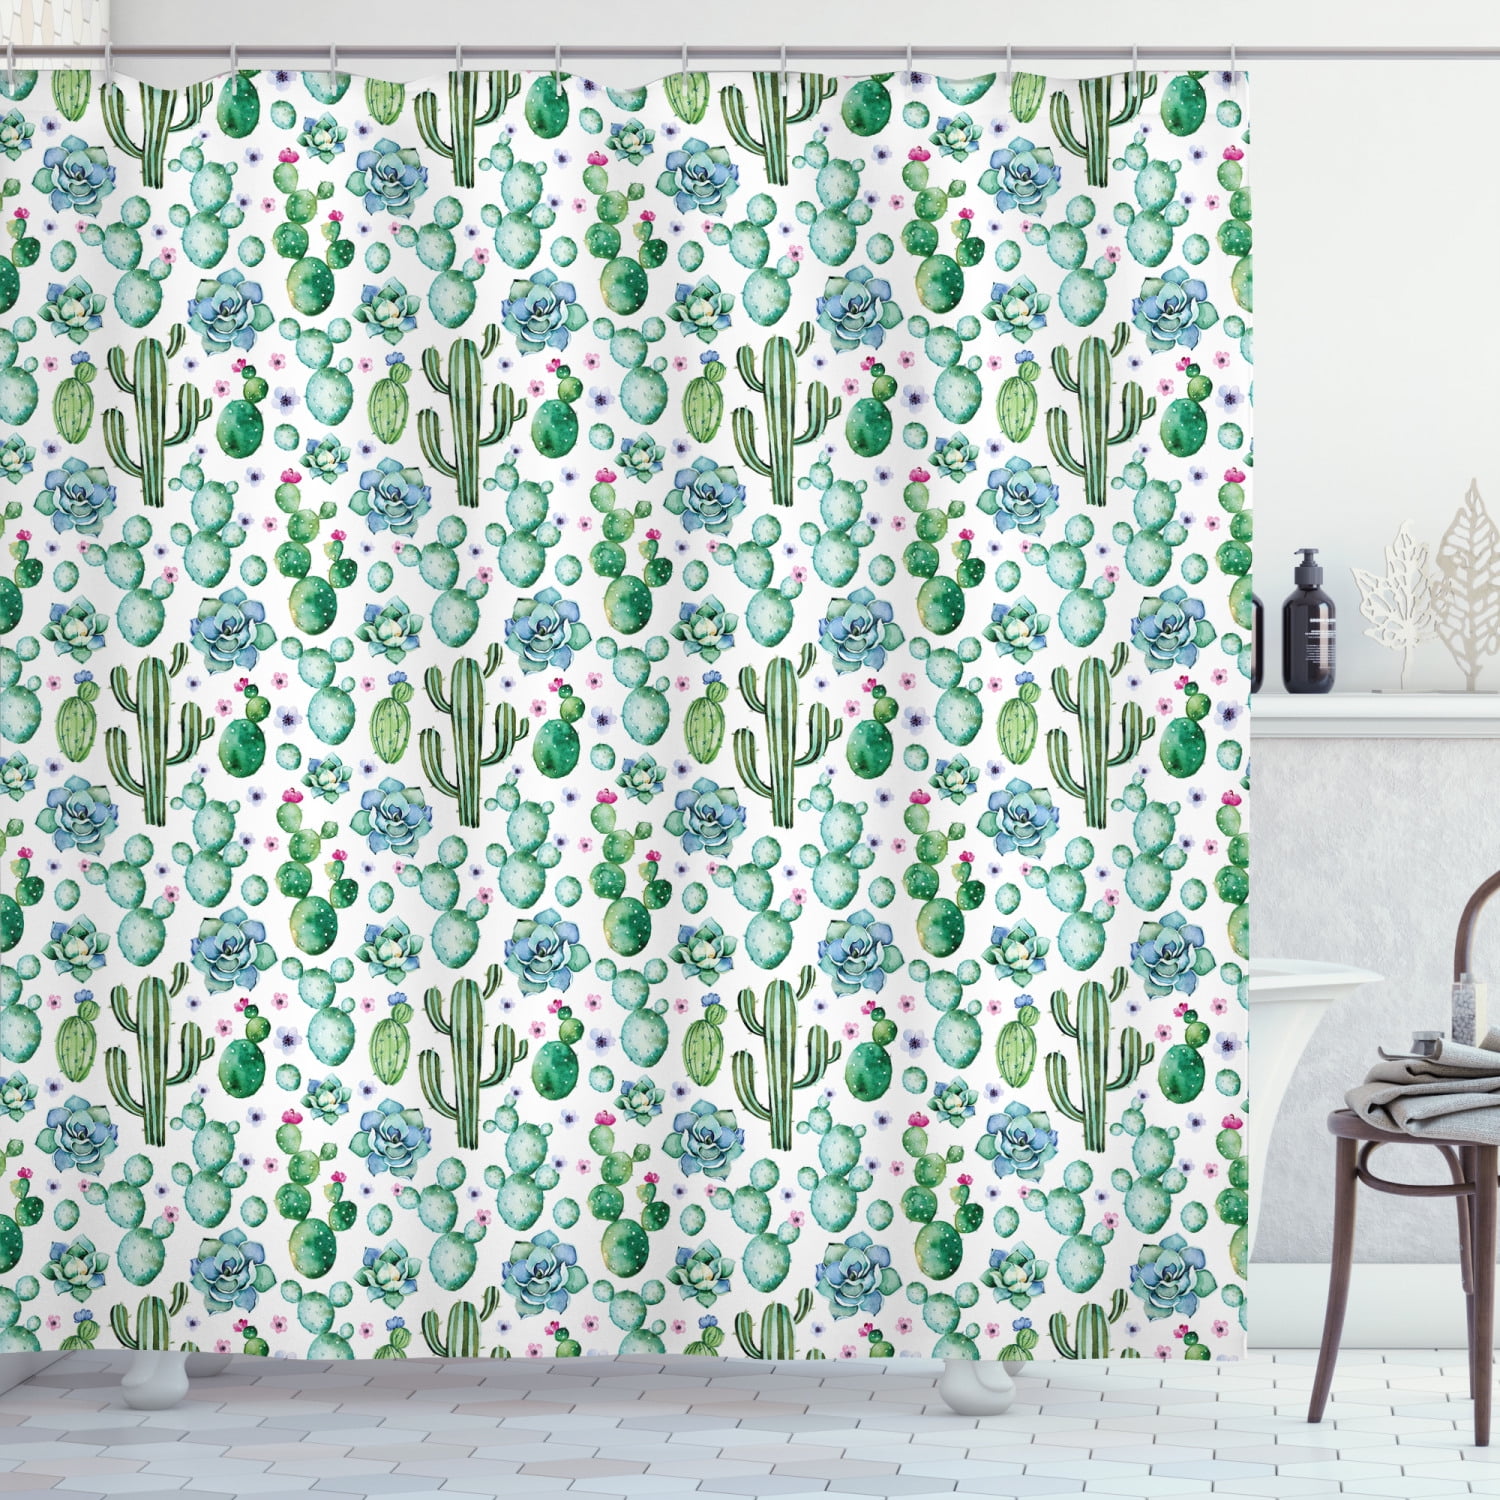 Bathroom Waterproof Fabric Shower Curtain Set Various Succulents Plants Pattern 